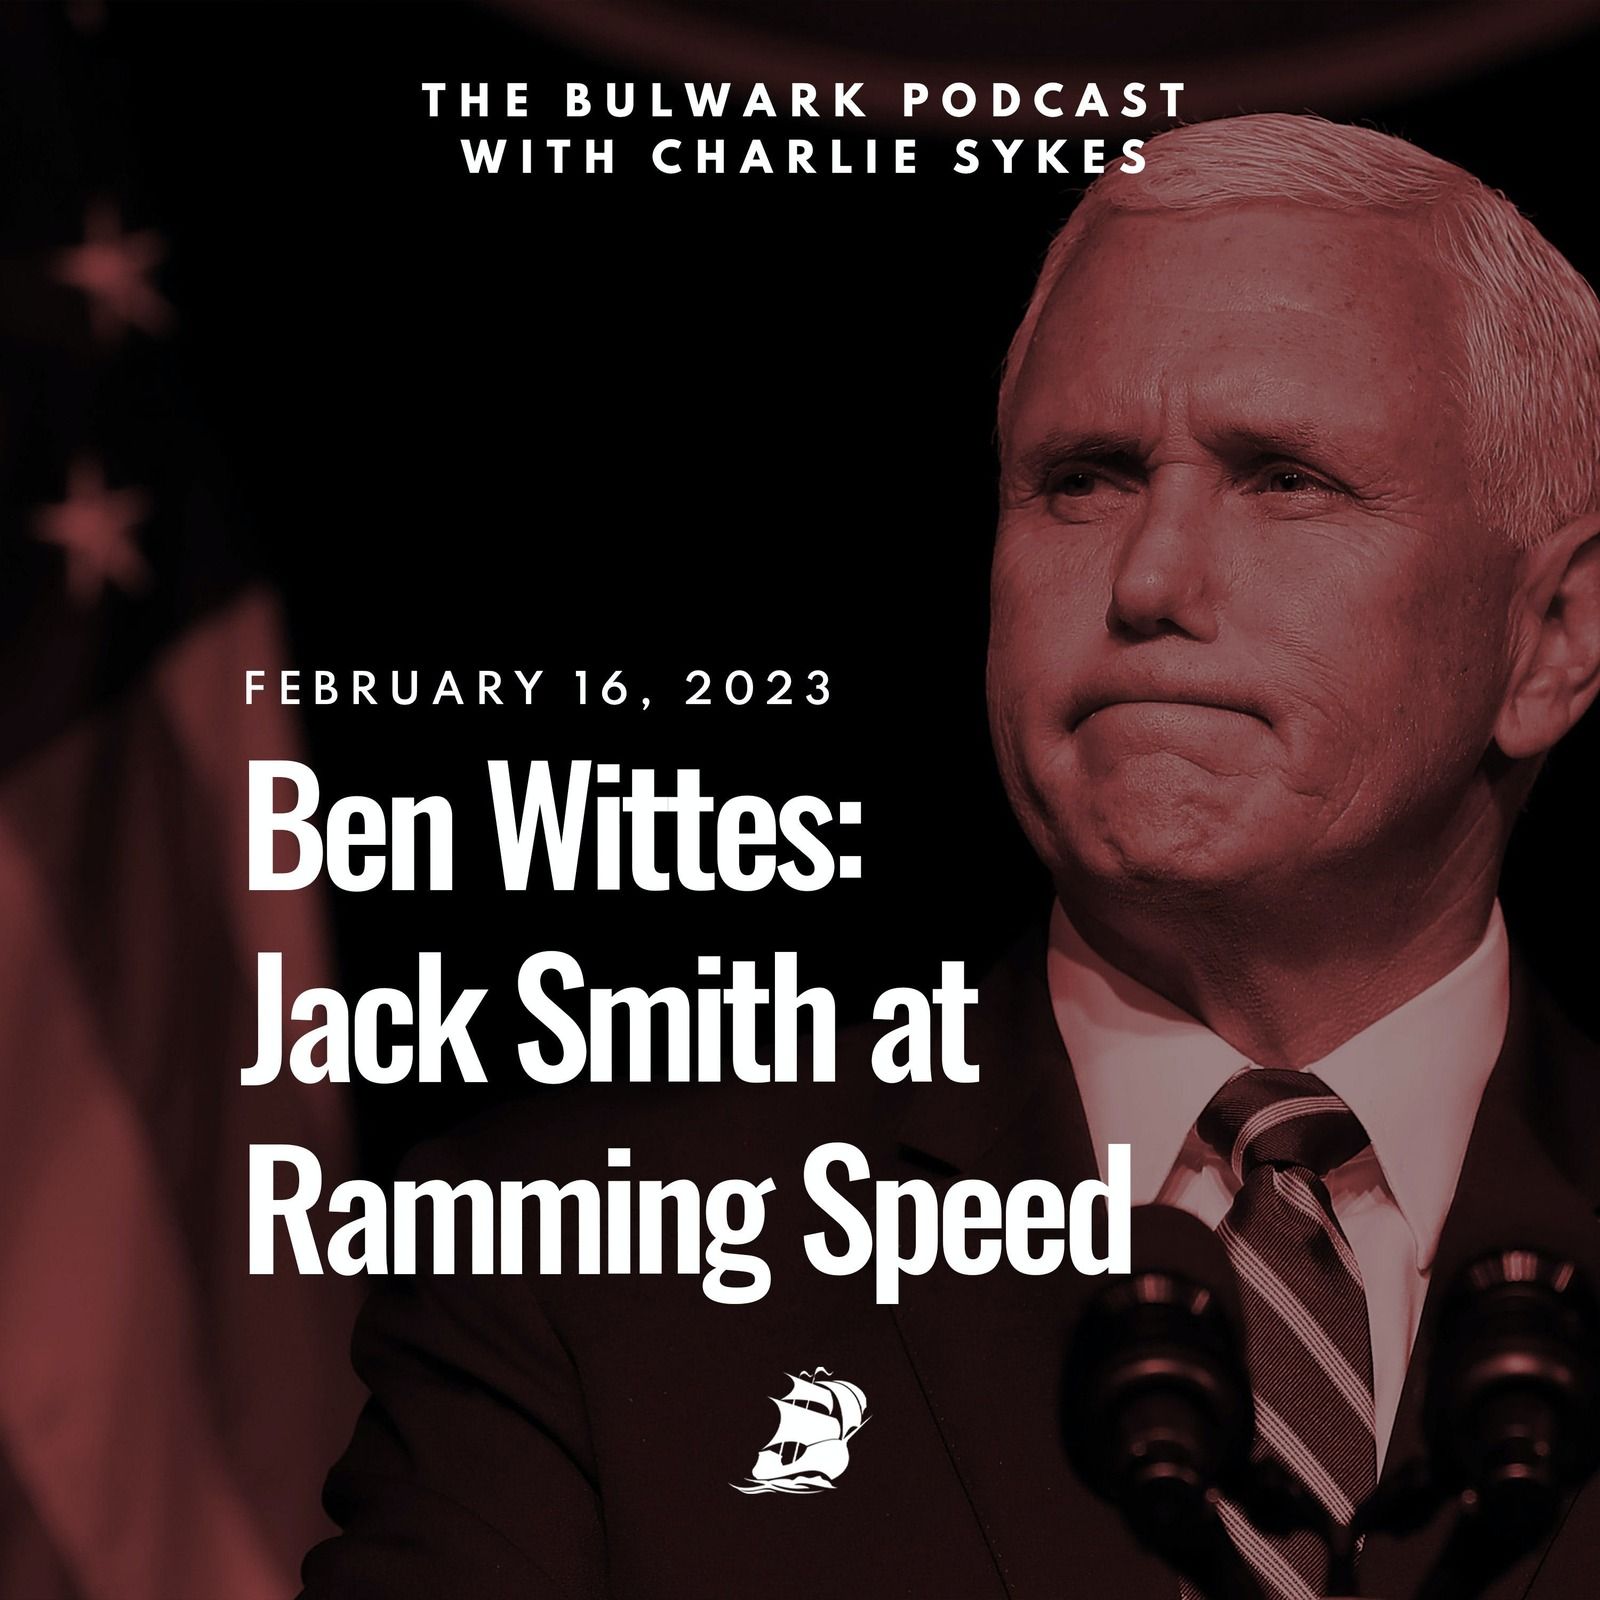 Ben Wittes: Jack Smith at Ramming Speed